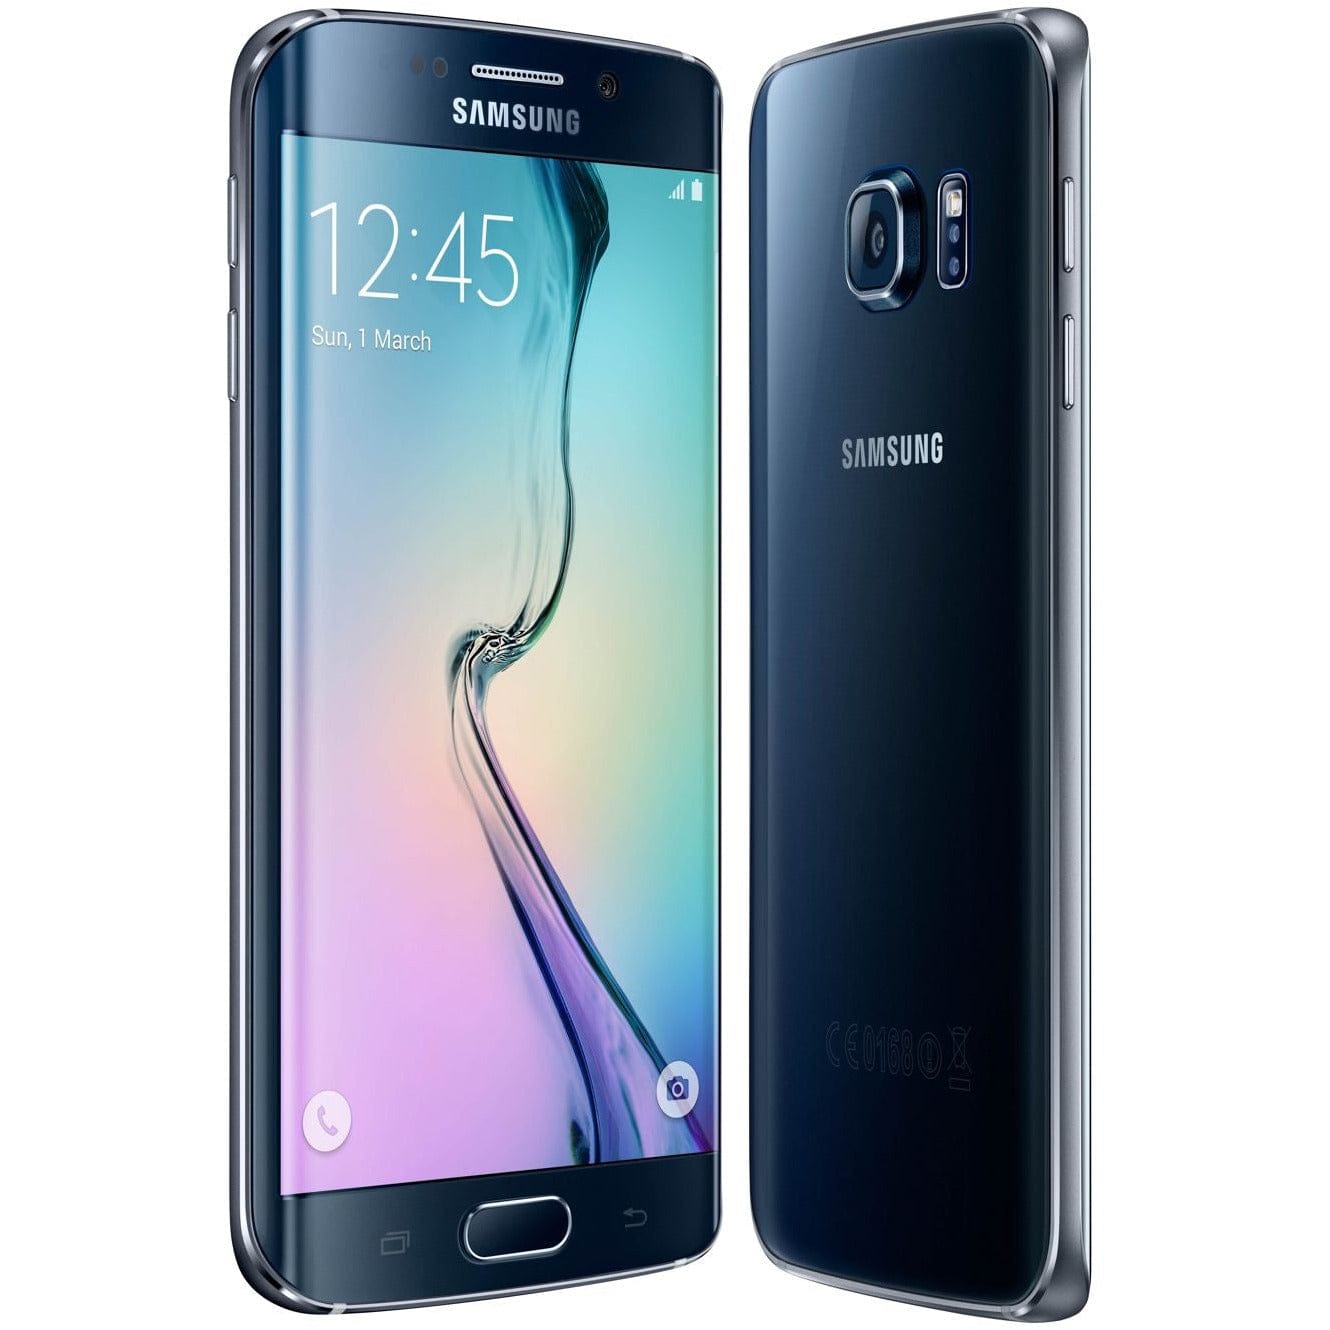 Samsung Galaxy S6 edge SMG925i - 32 GB - Black Sapphire - Unlock